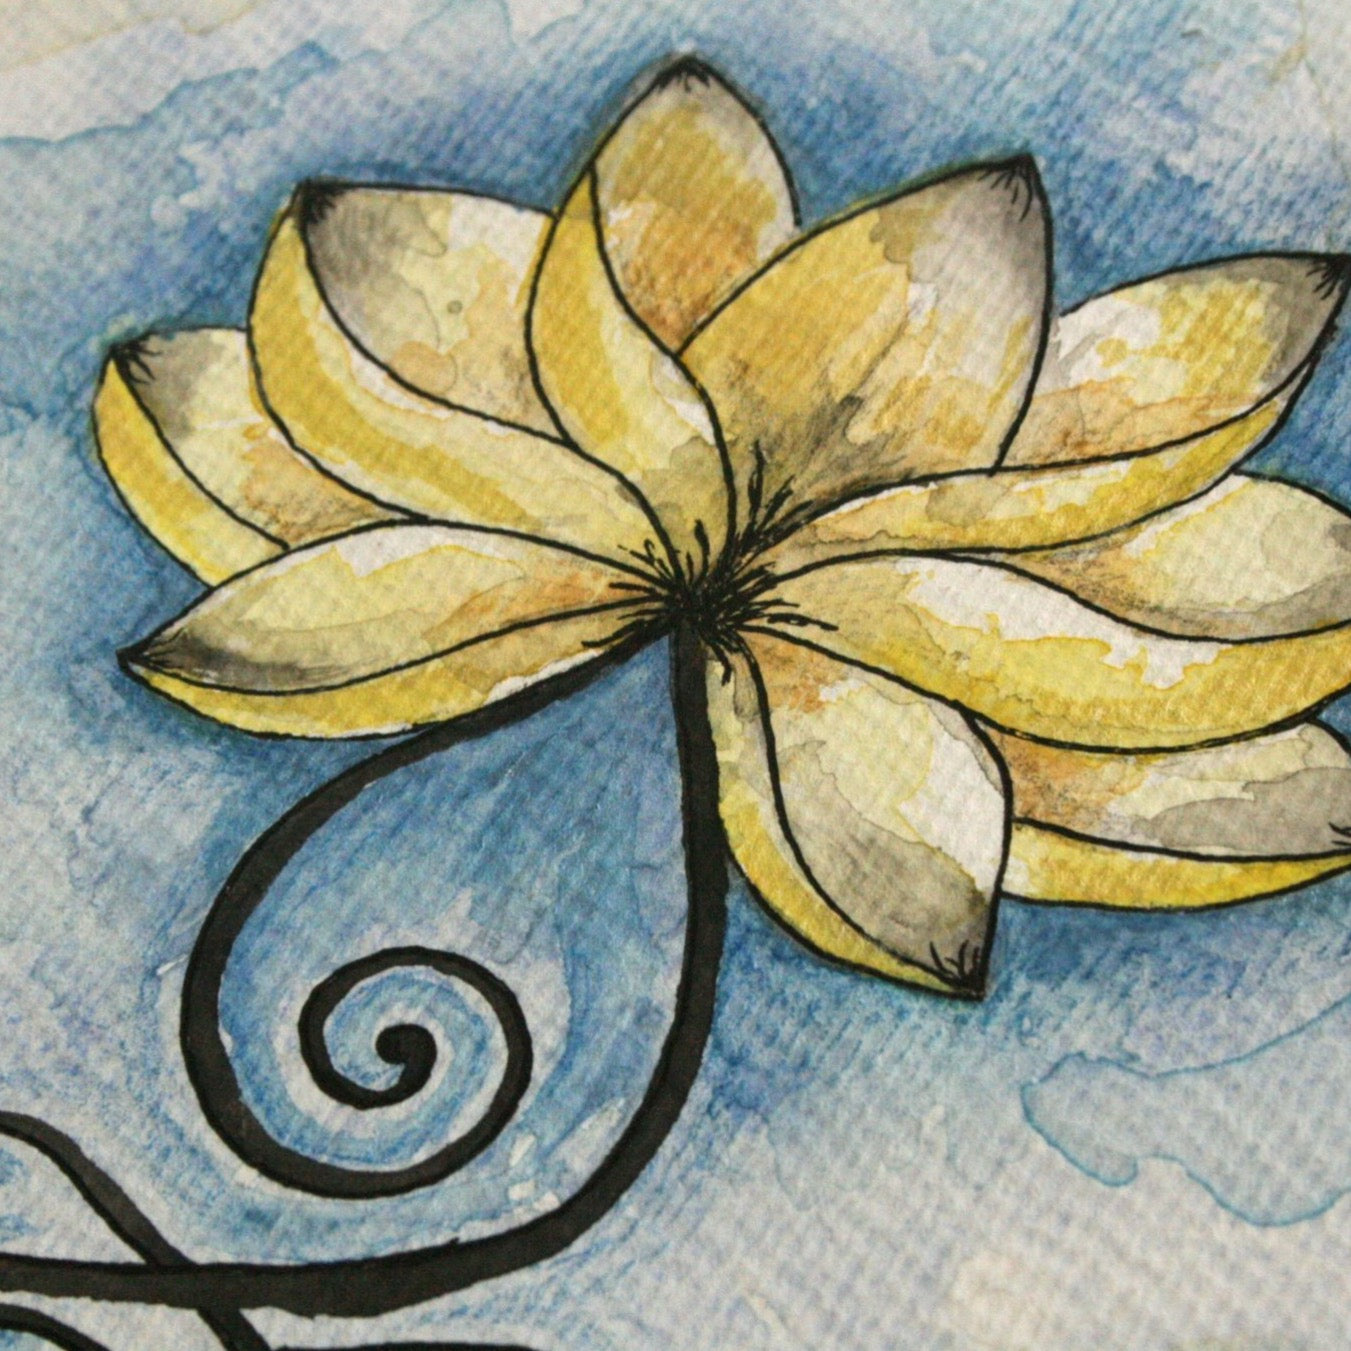 Golden Lotus Flower & Unalome Original Watercolour Painting A4 - Andune Jewellery